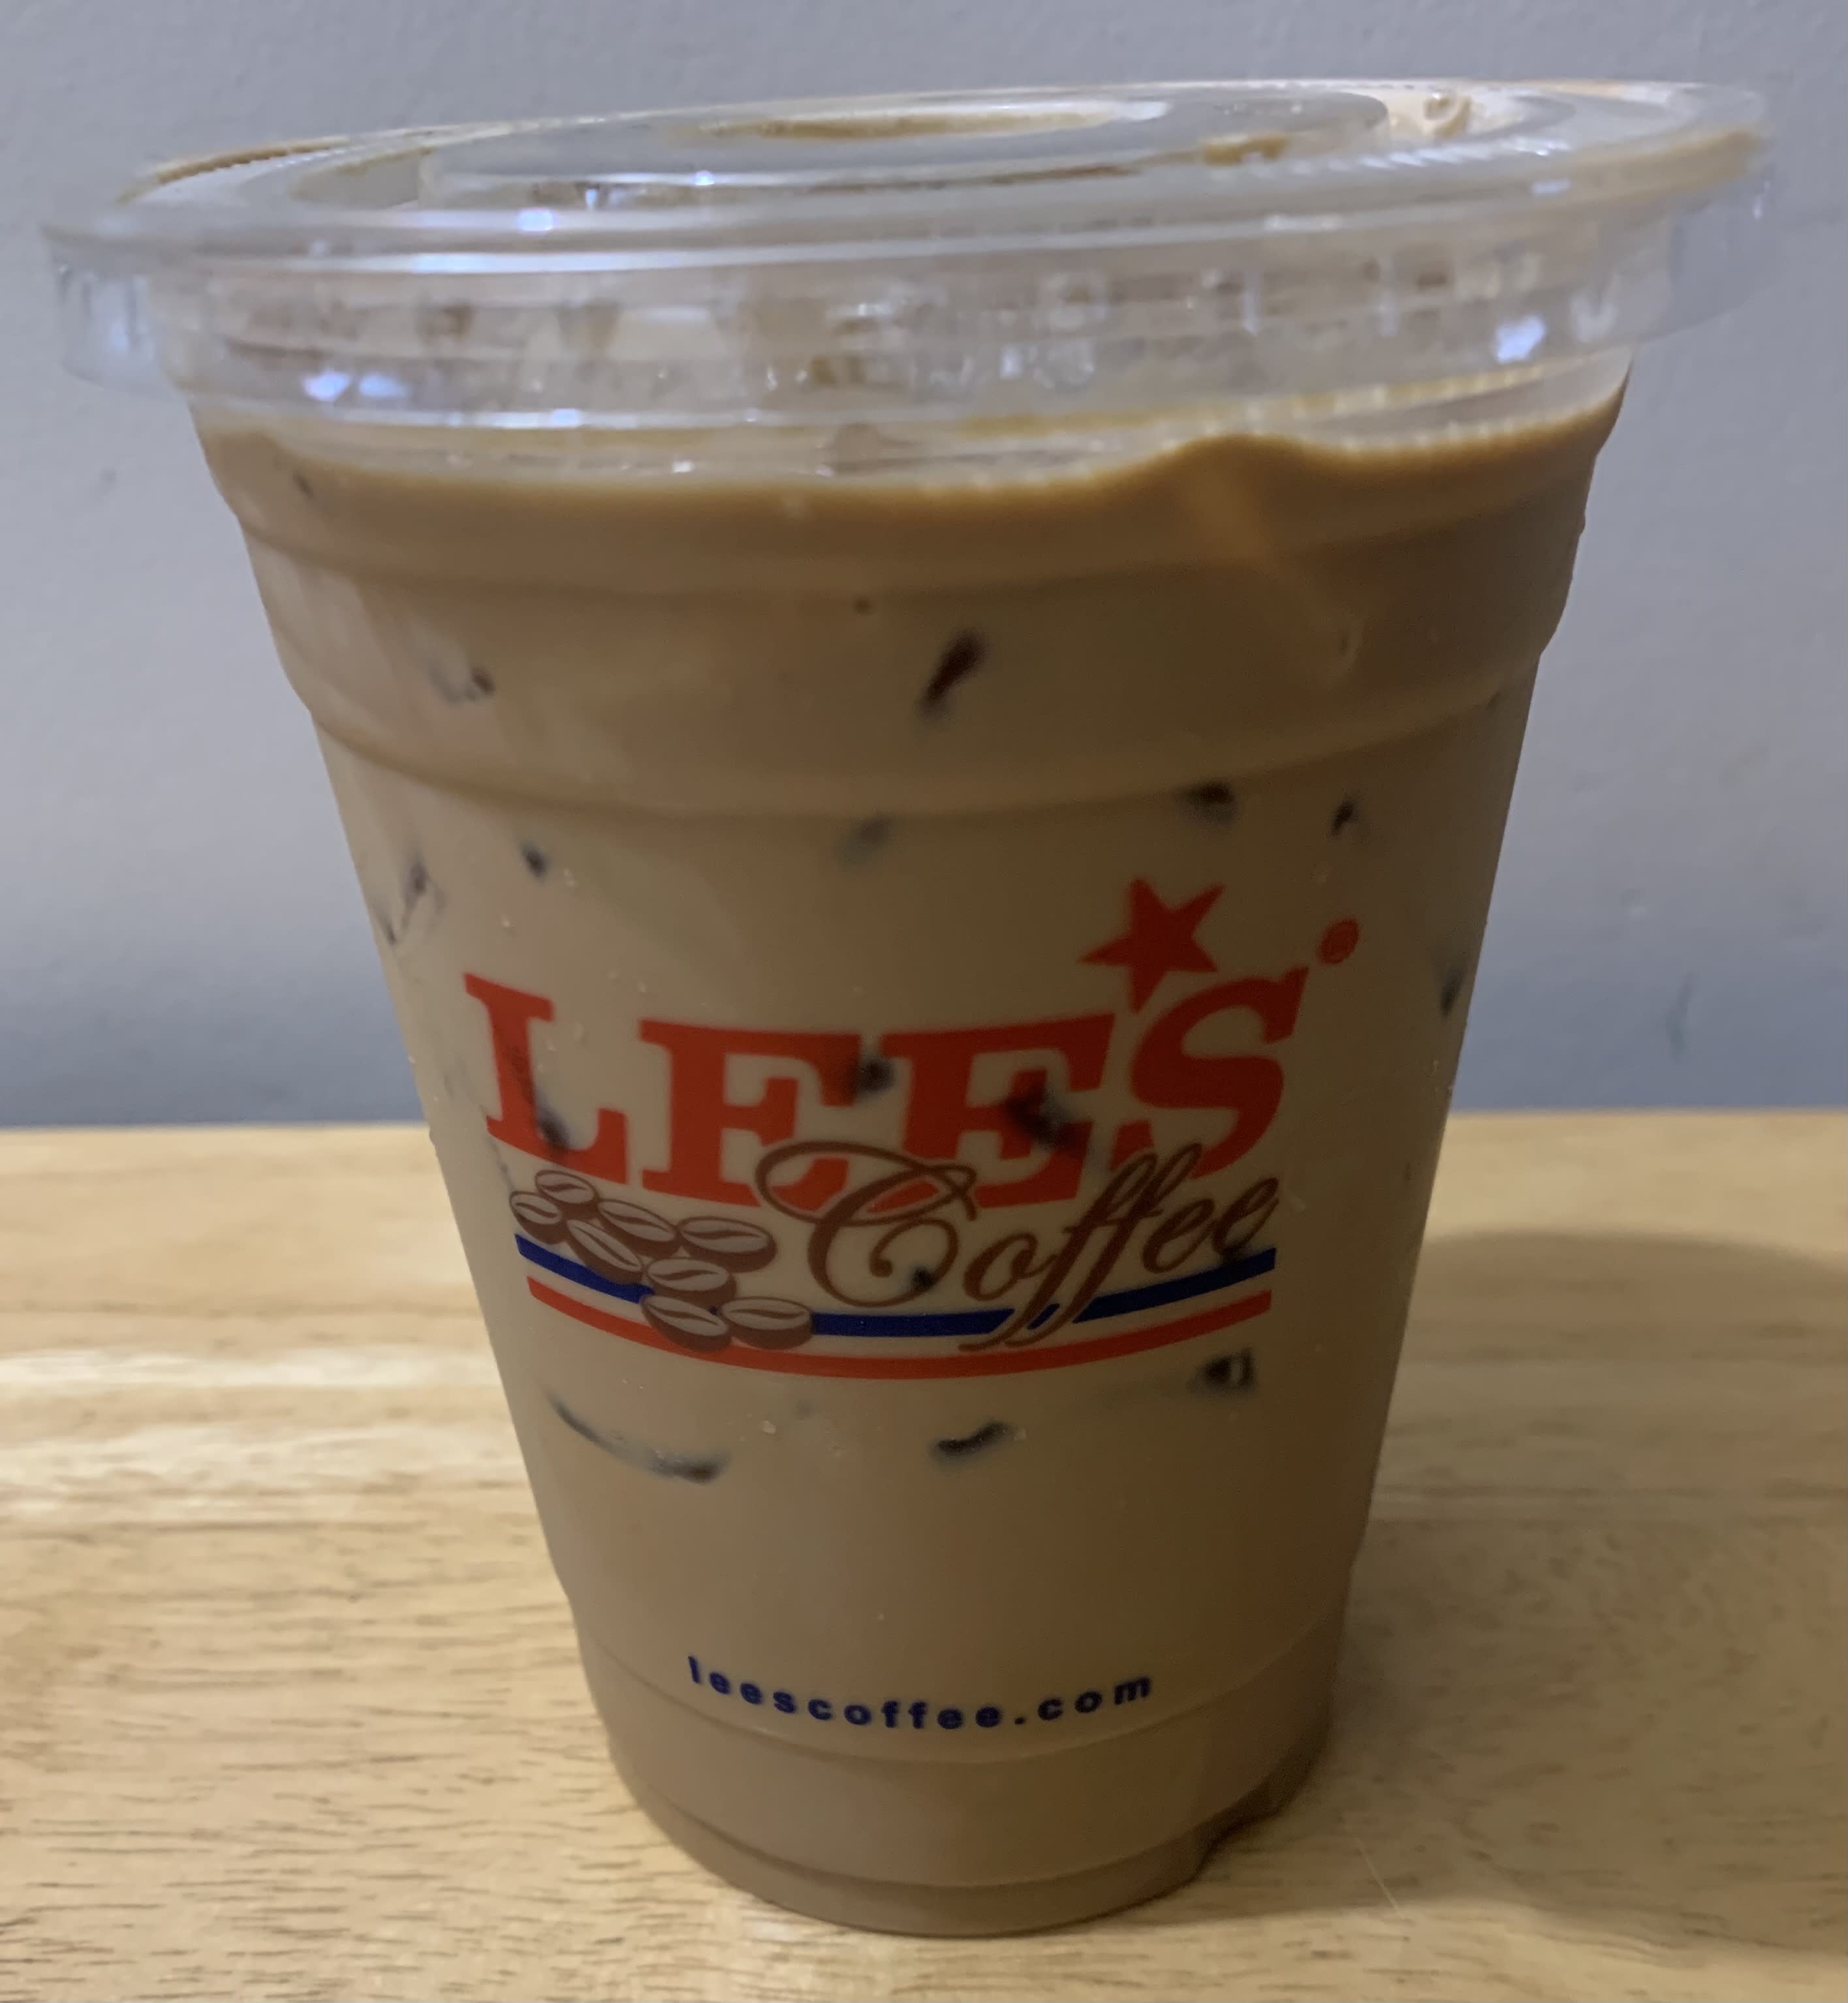 Lee's Coffee Café Latte Concentrate Review | Kitchn